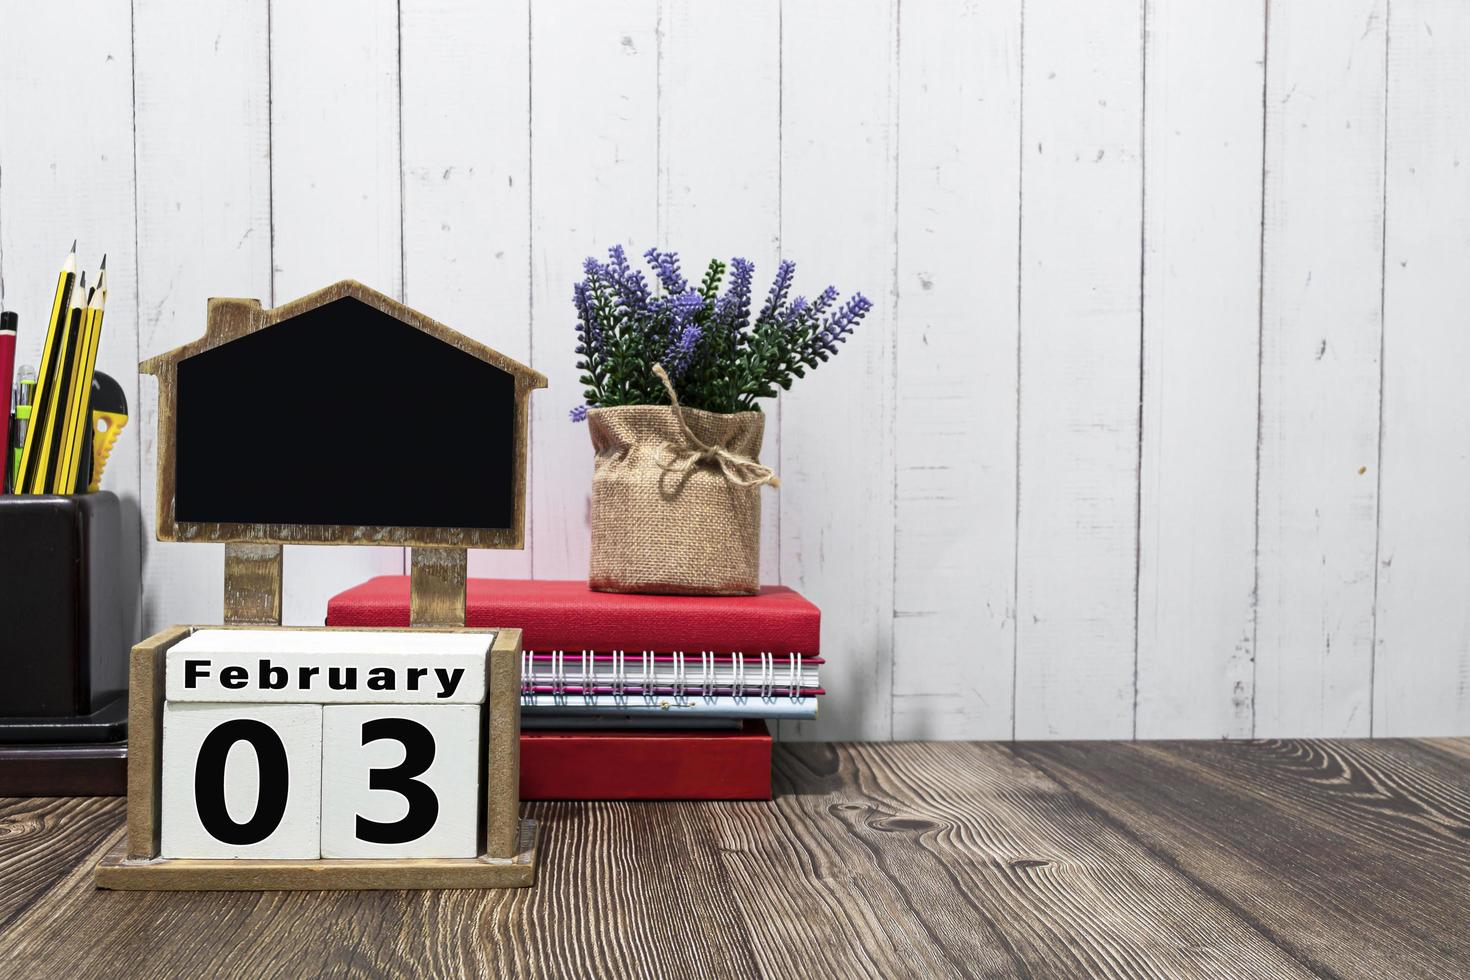 03 de febrero texto de fecha de calendario en bloque de madera con papelería en escritorio de madera. foto